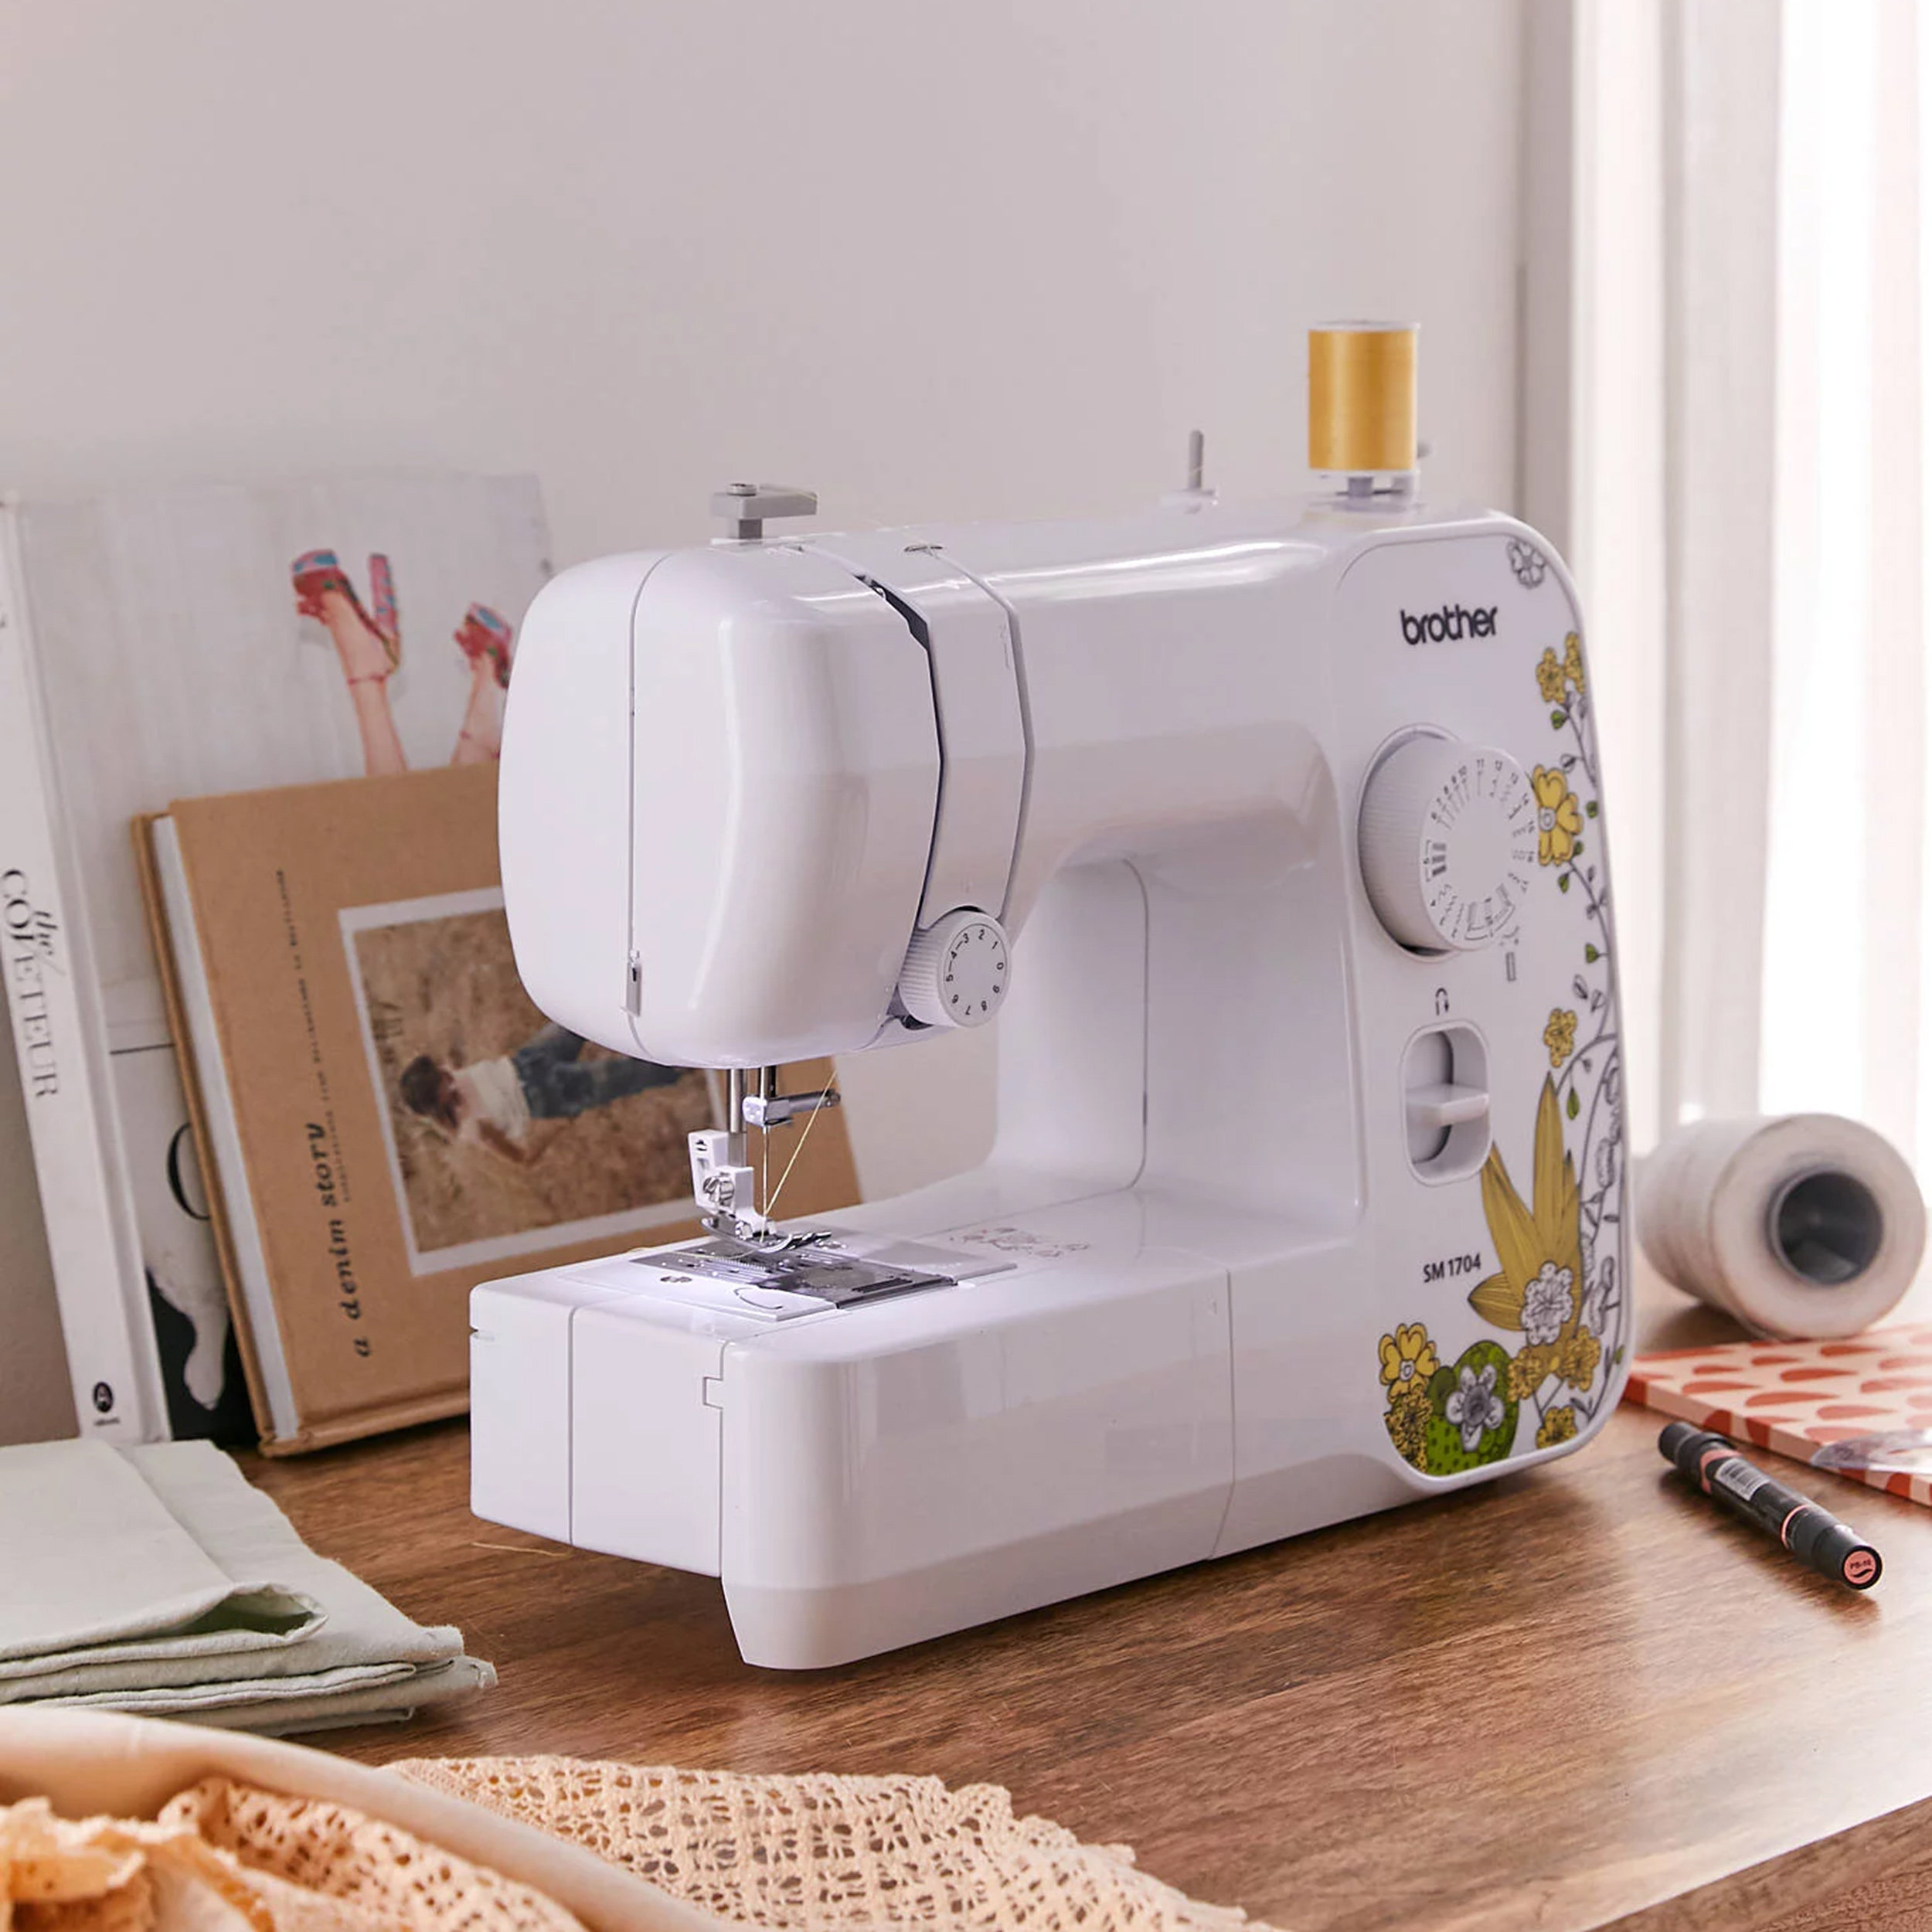 Brother portable sewing machine 17 stitch lx3817 - arts & crafts